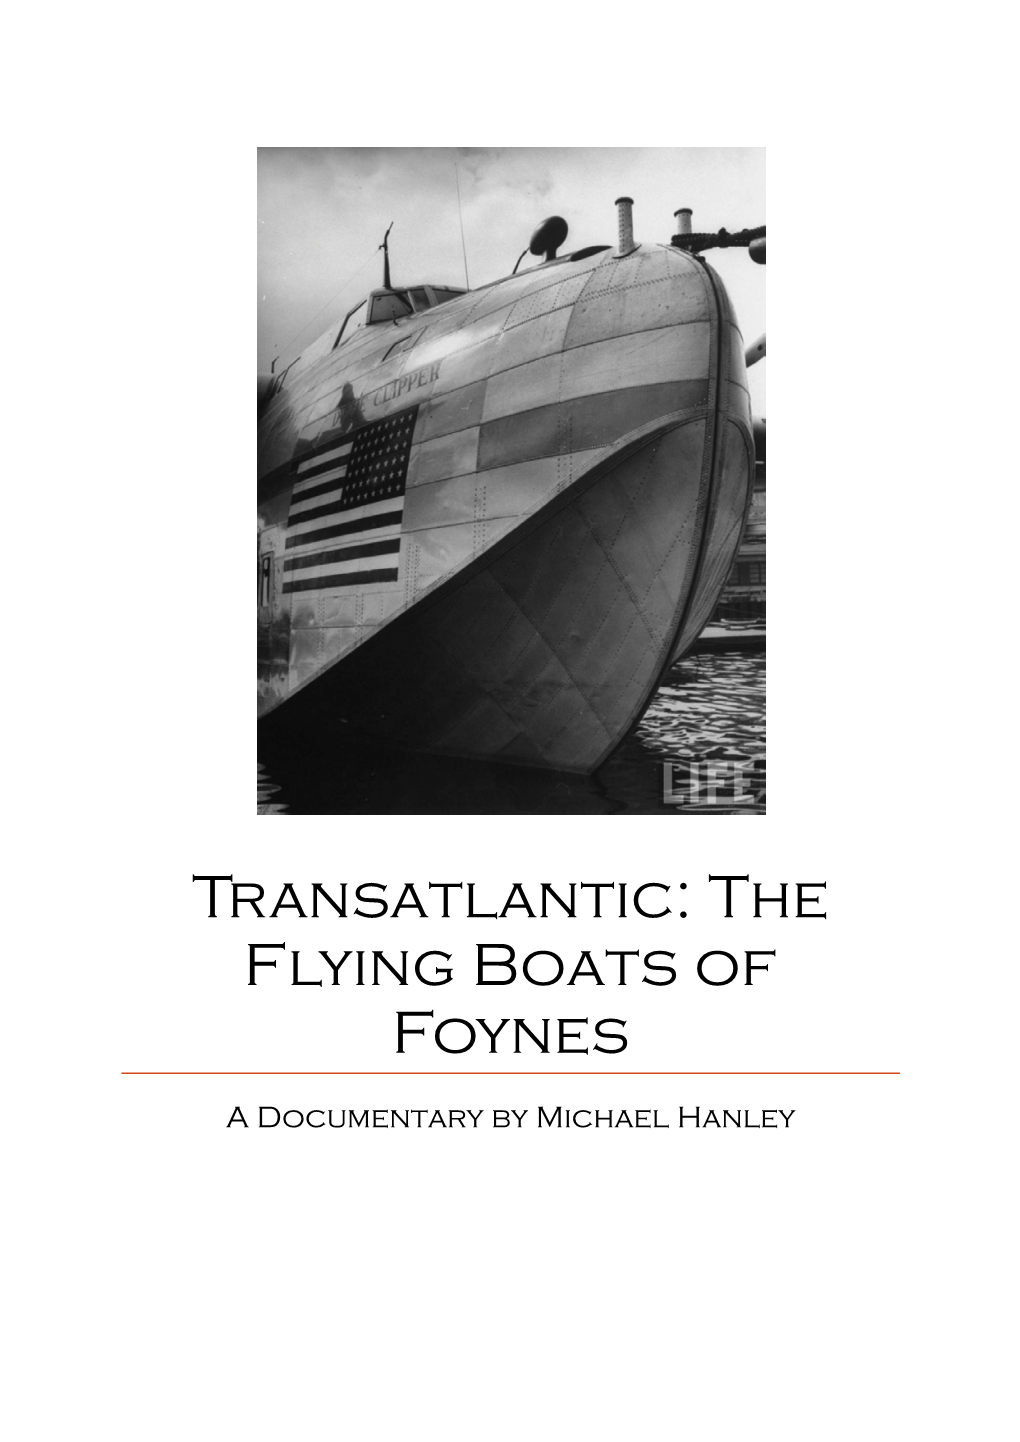 Transatlantic: the Flying Boats of Foynes